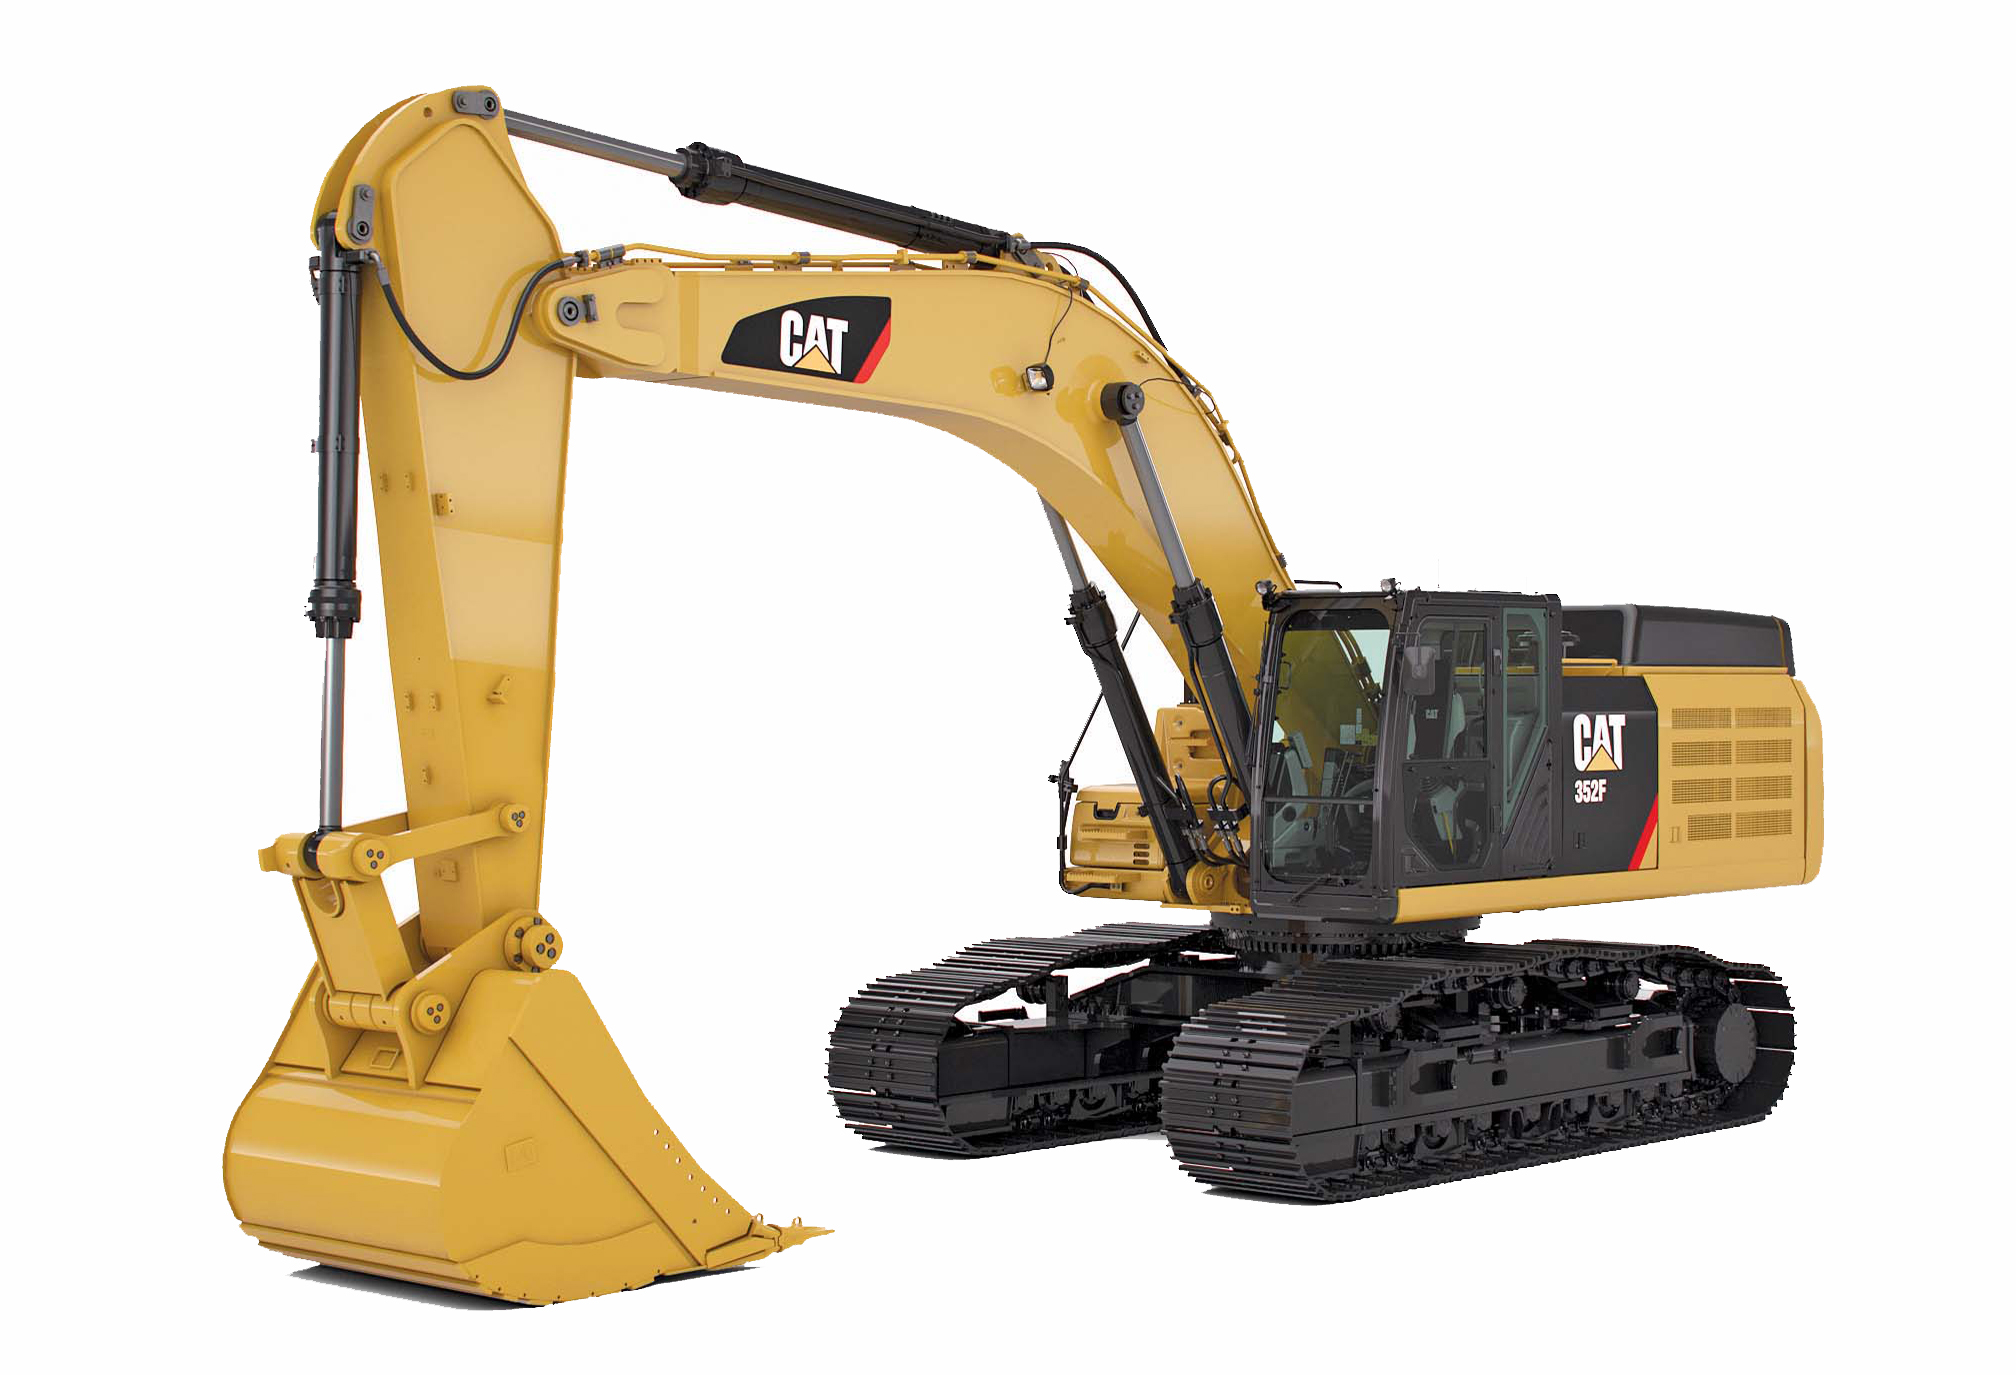 Caterpillar’s new 352F hydraulic excavator